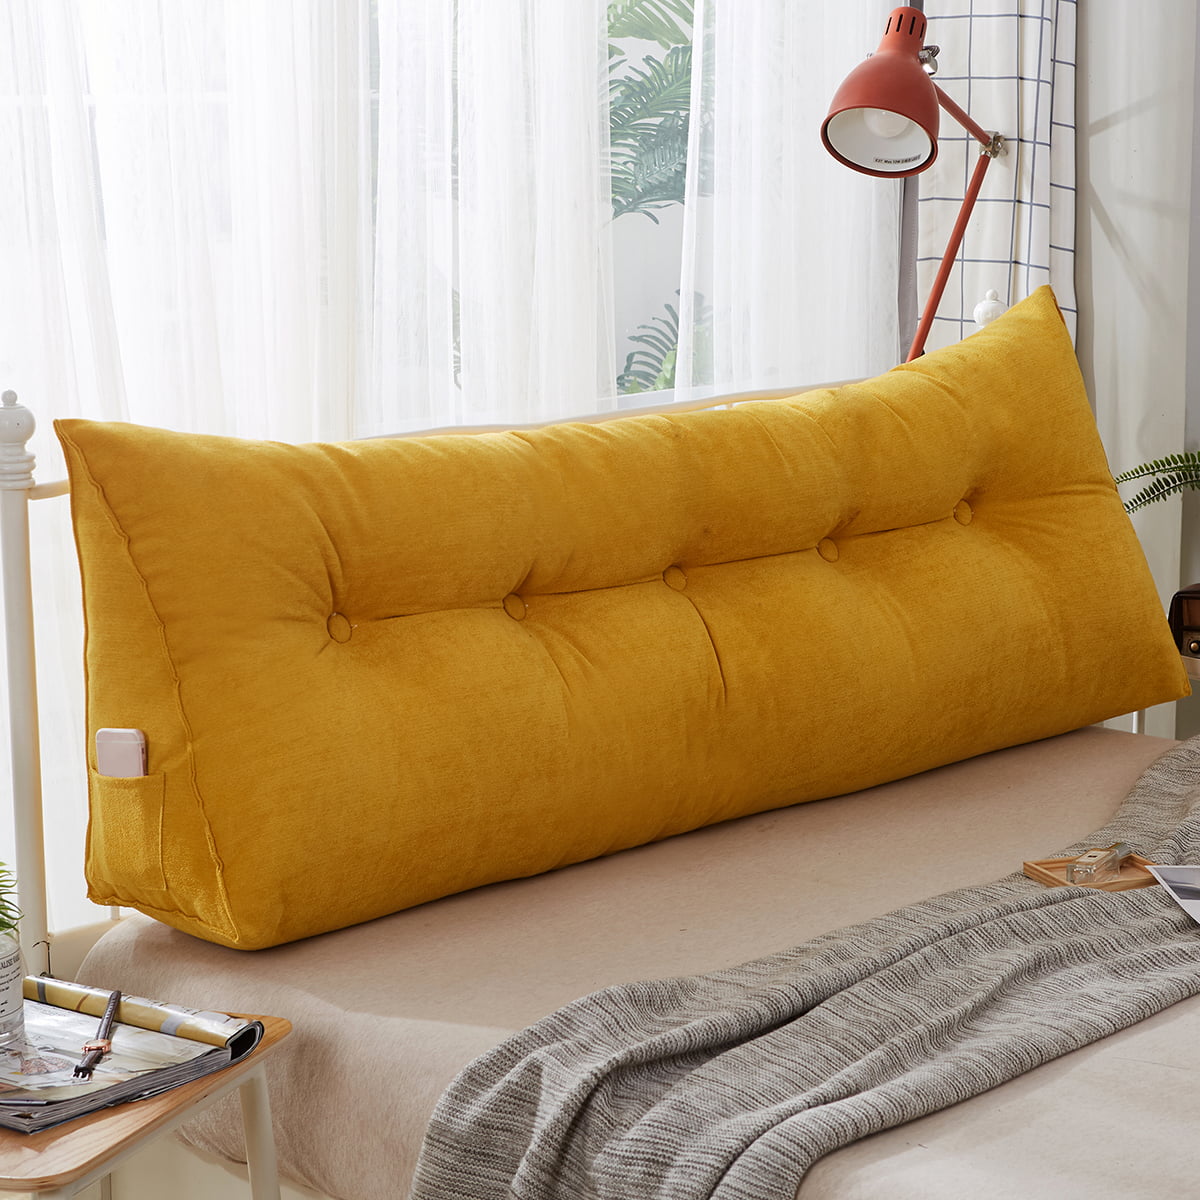 sofa cushion support for sagging cushions